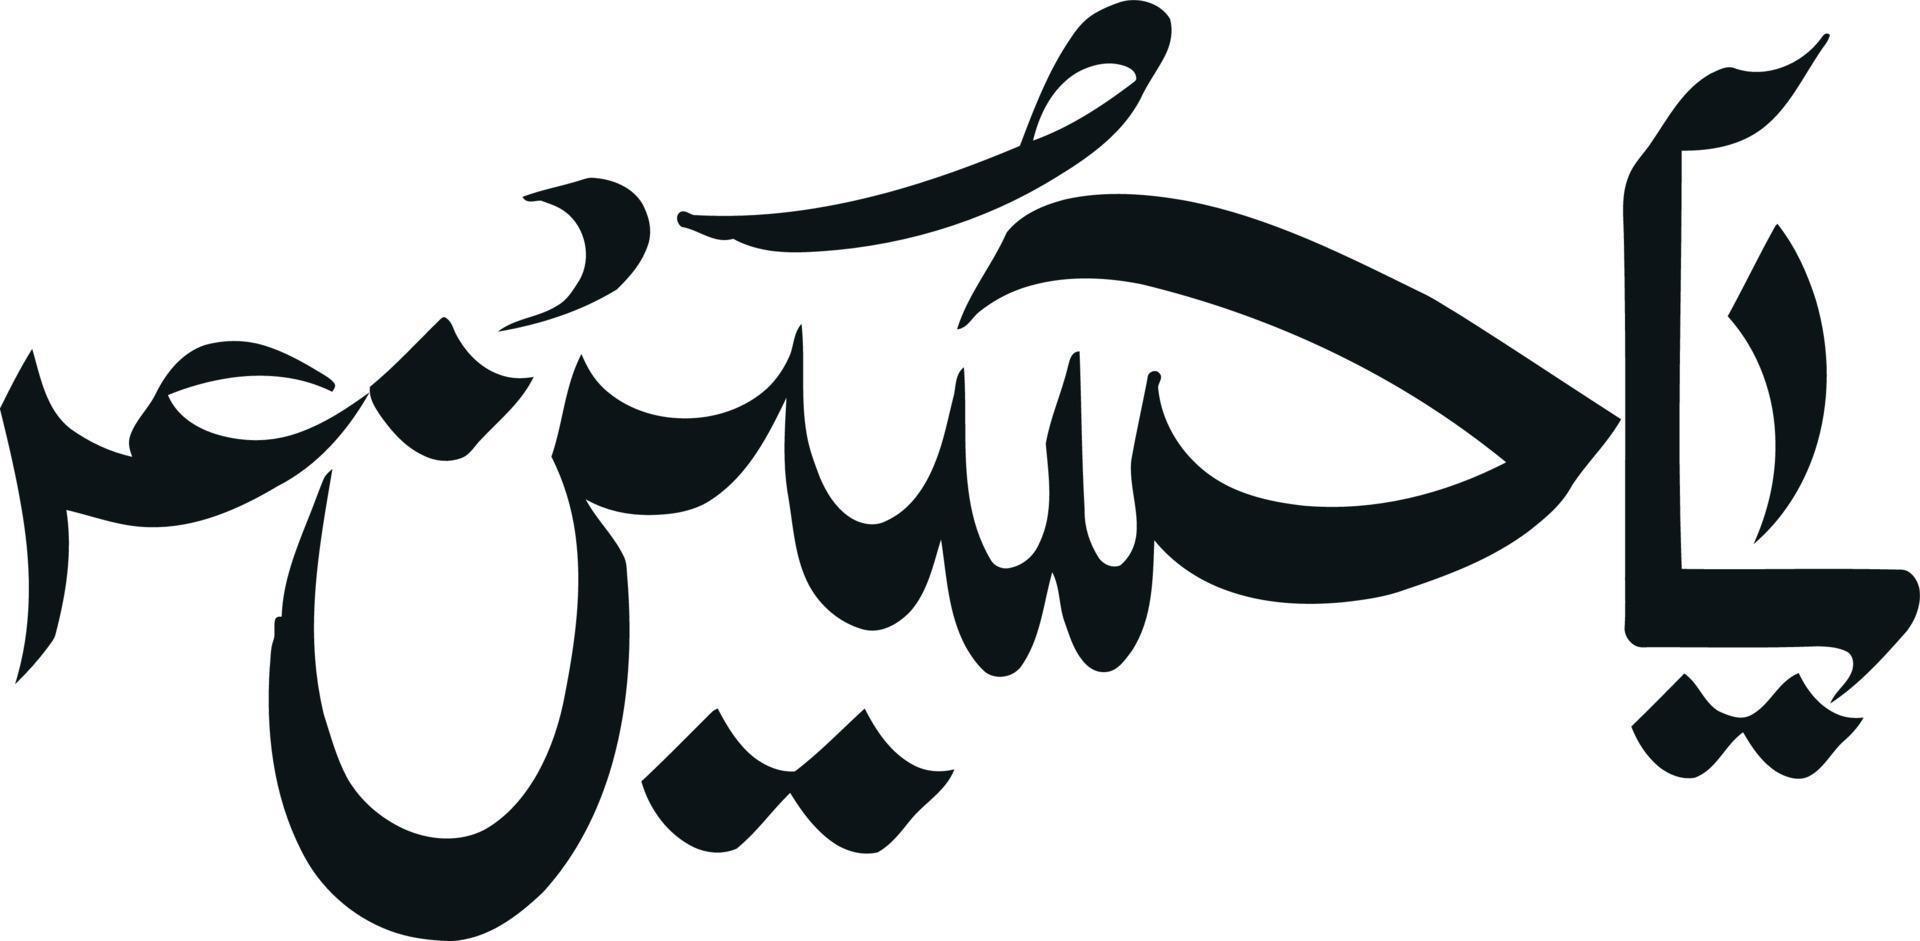 vetor livre de caligrafia urdu islâmica de ya hussain